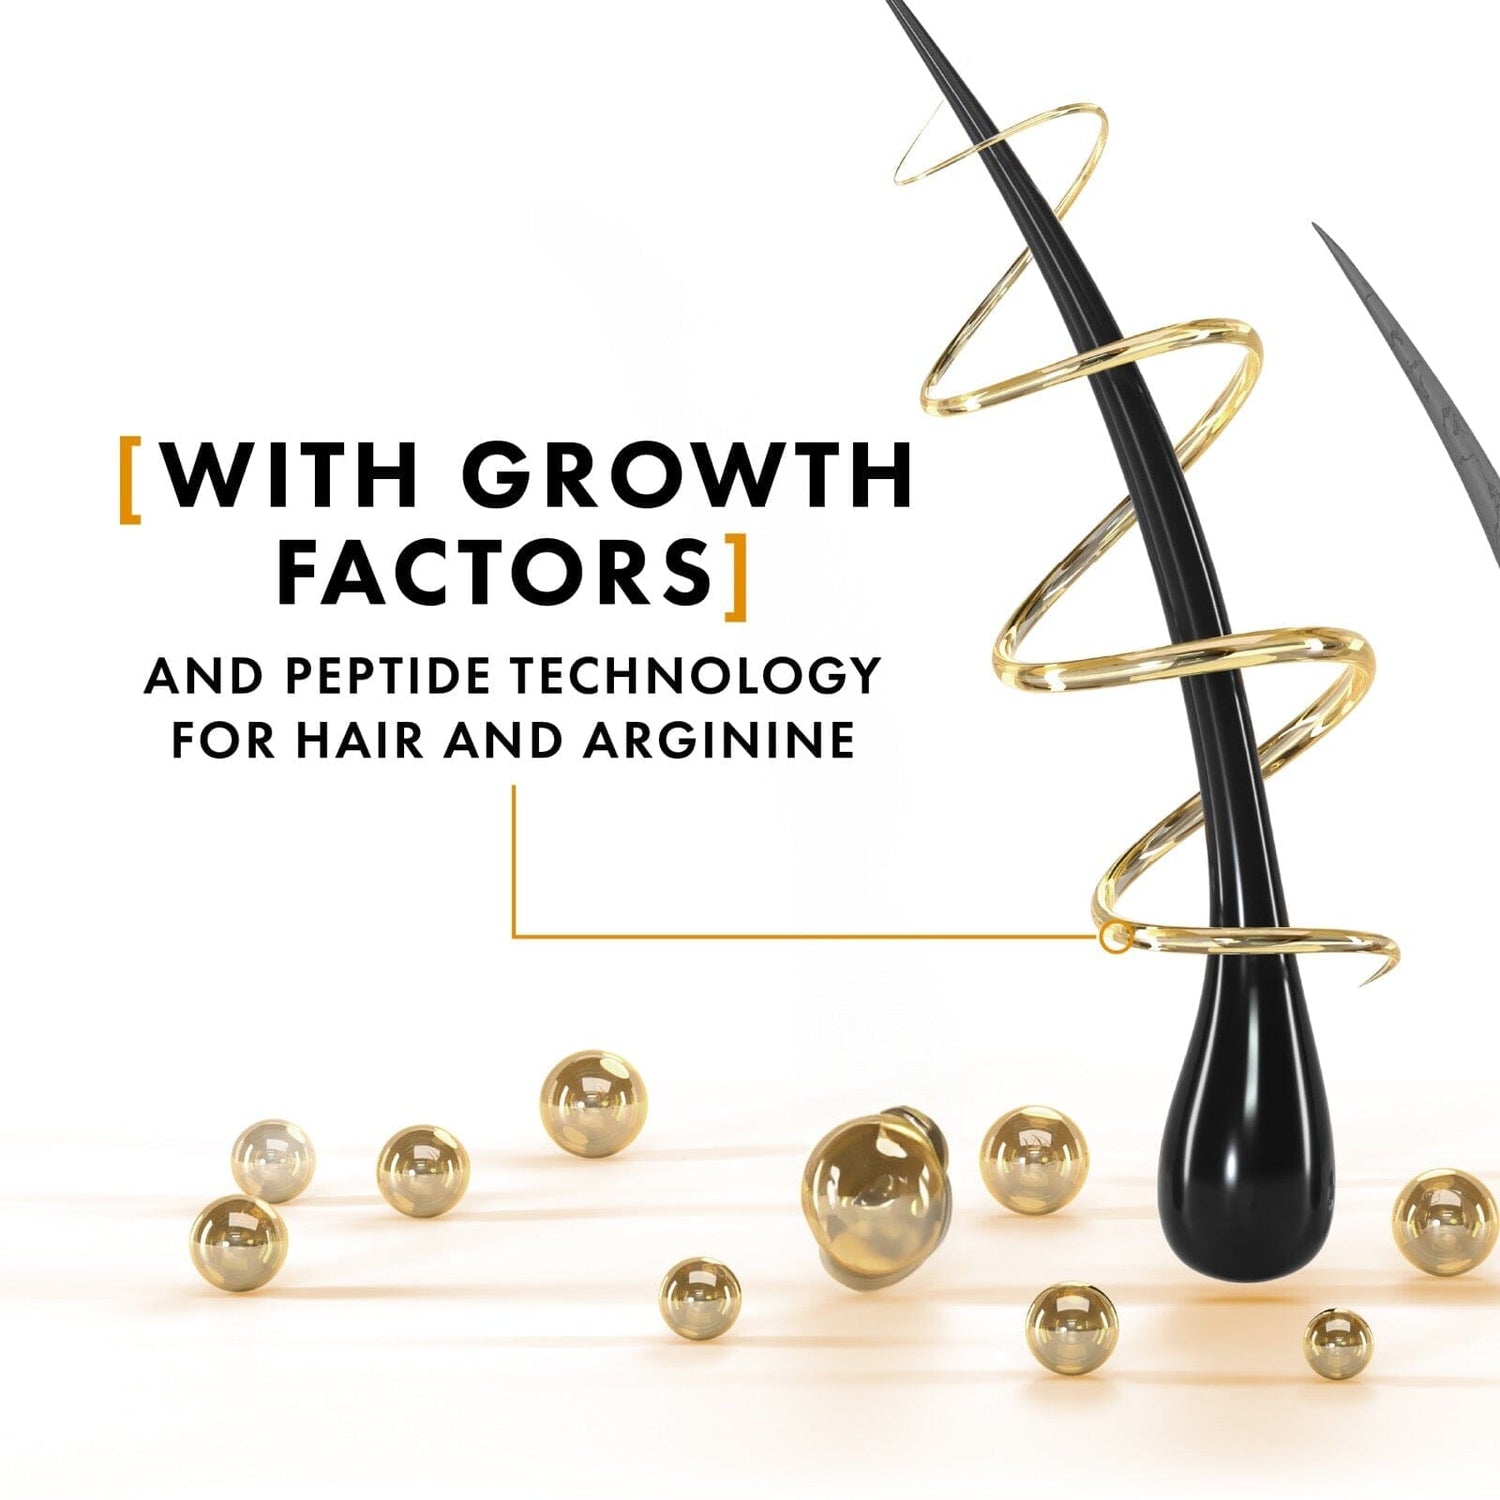 kit - 2 Hair Growth Booster Capilia Longa Stem Cells